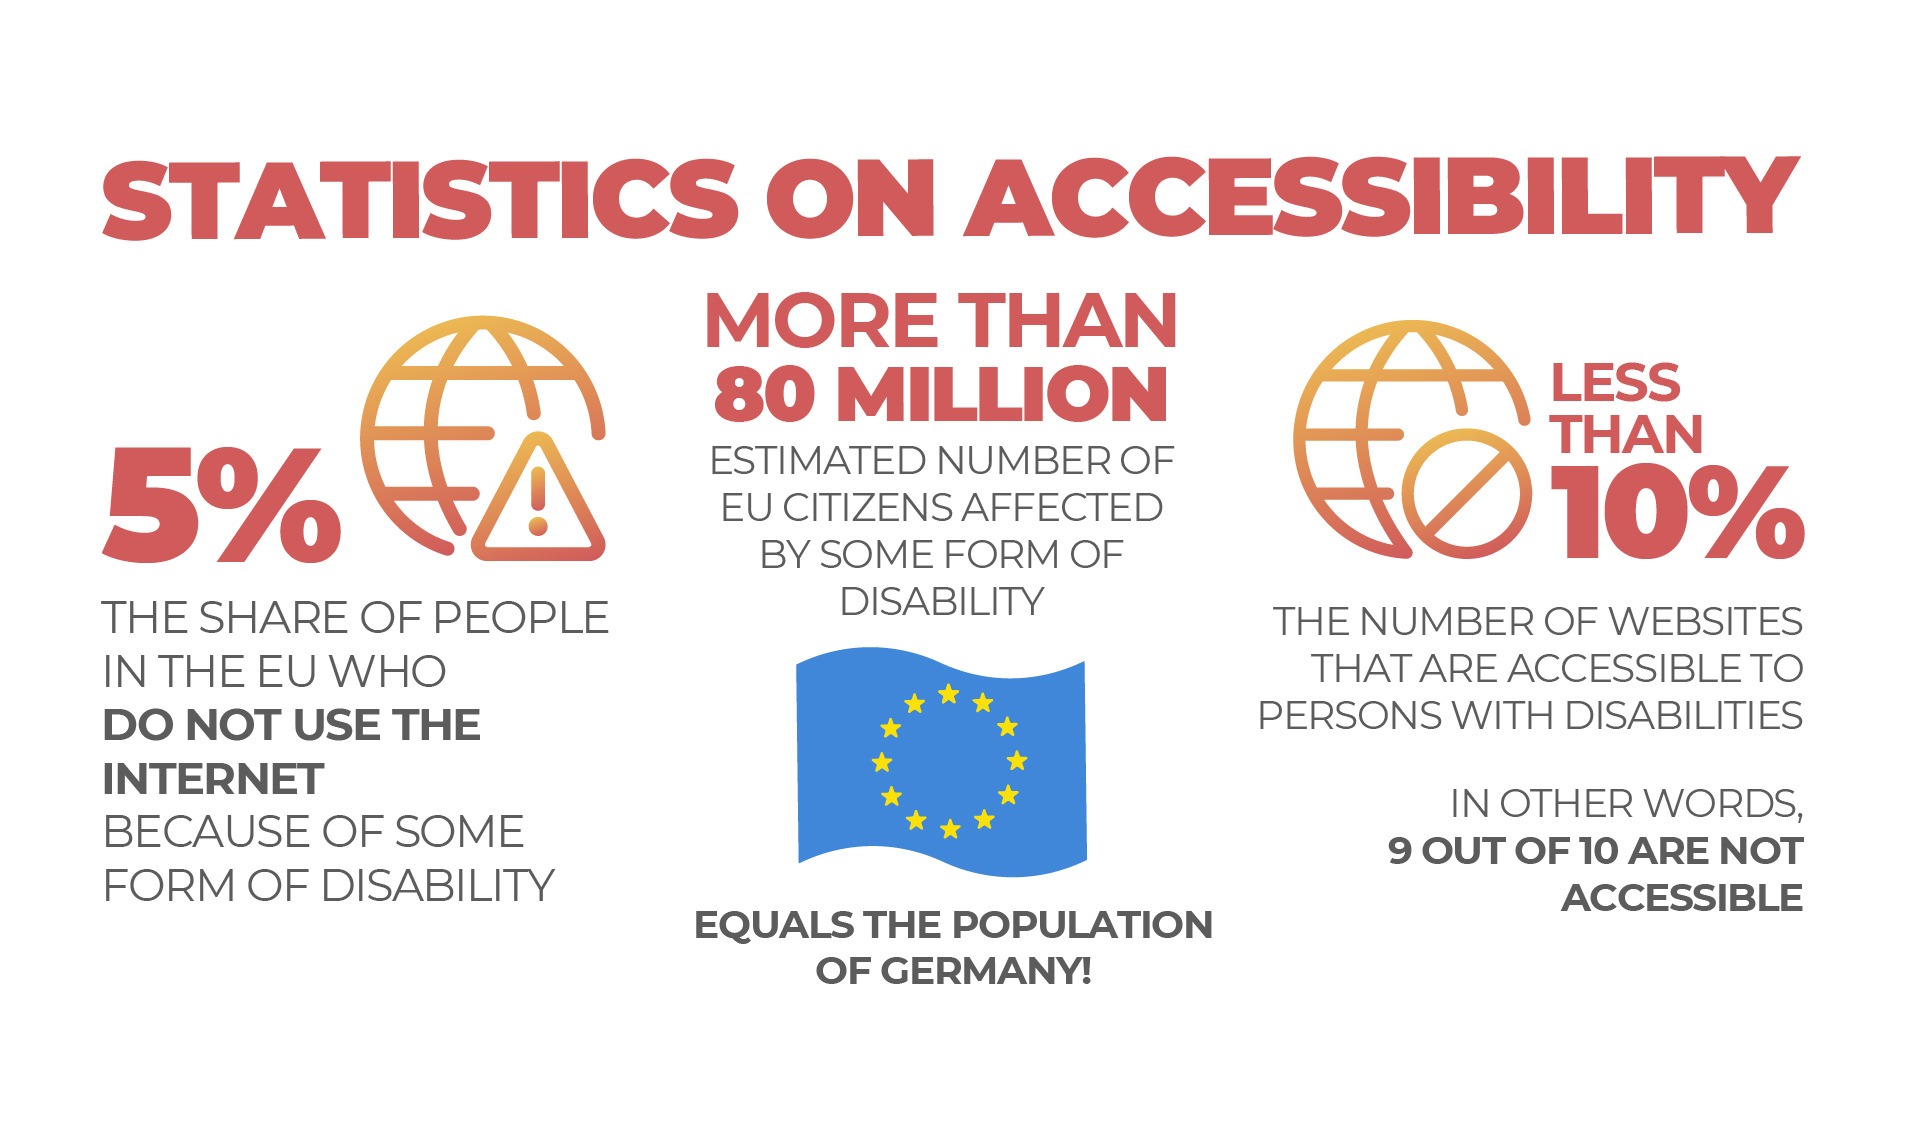 Statistics on accessibility